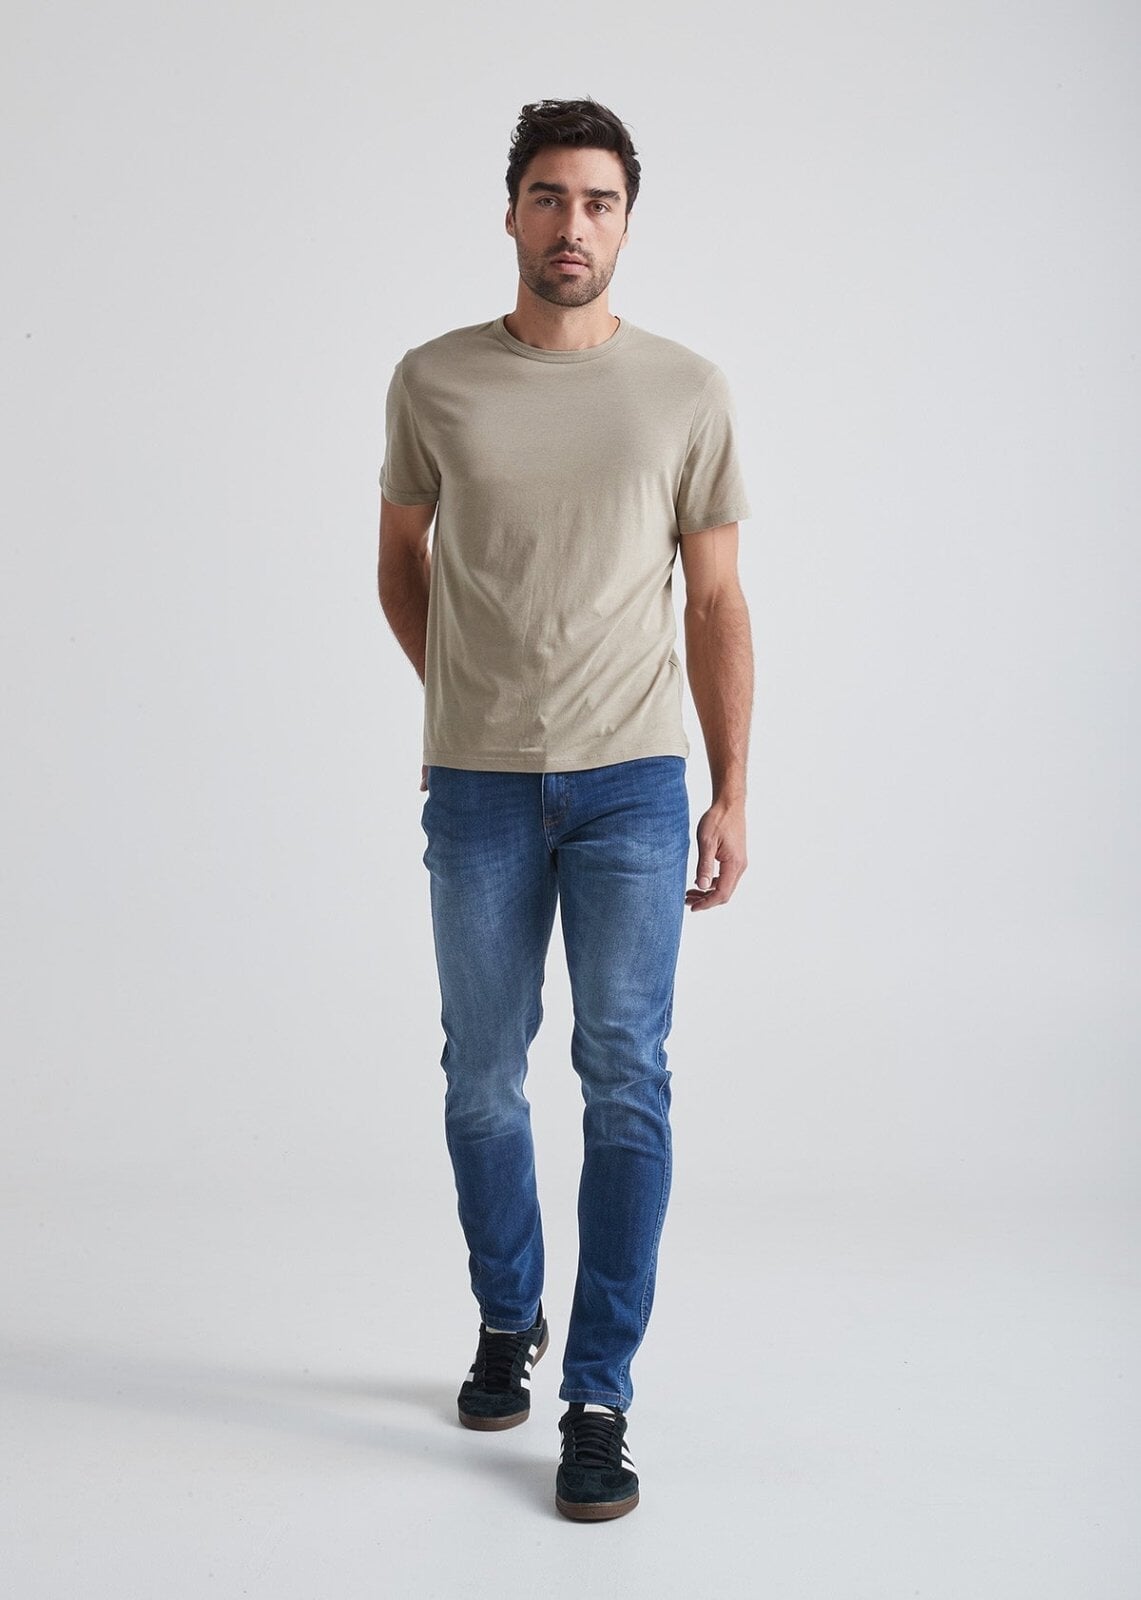 Men's Denim Shirts: Classic, stretch, lightweight